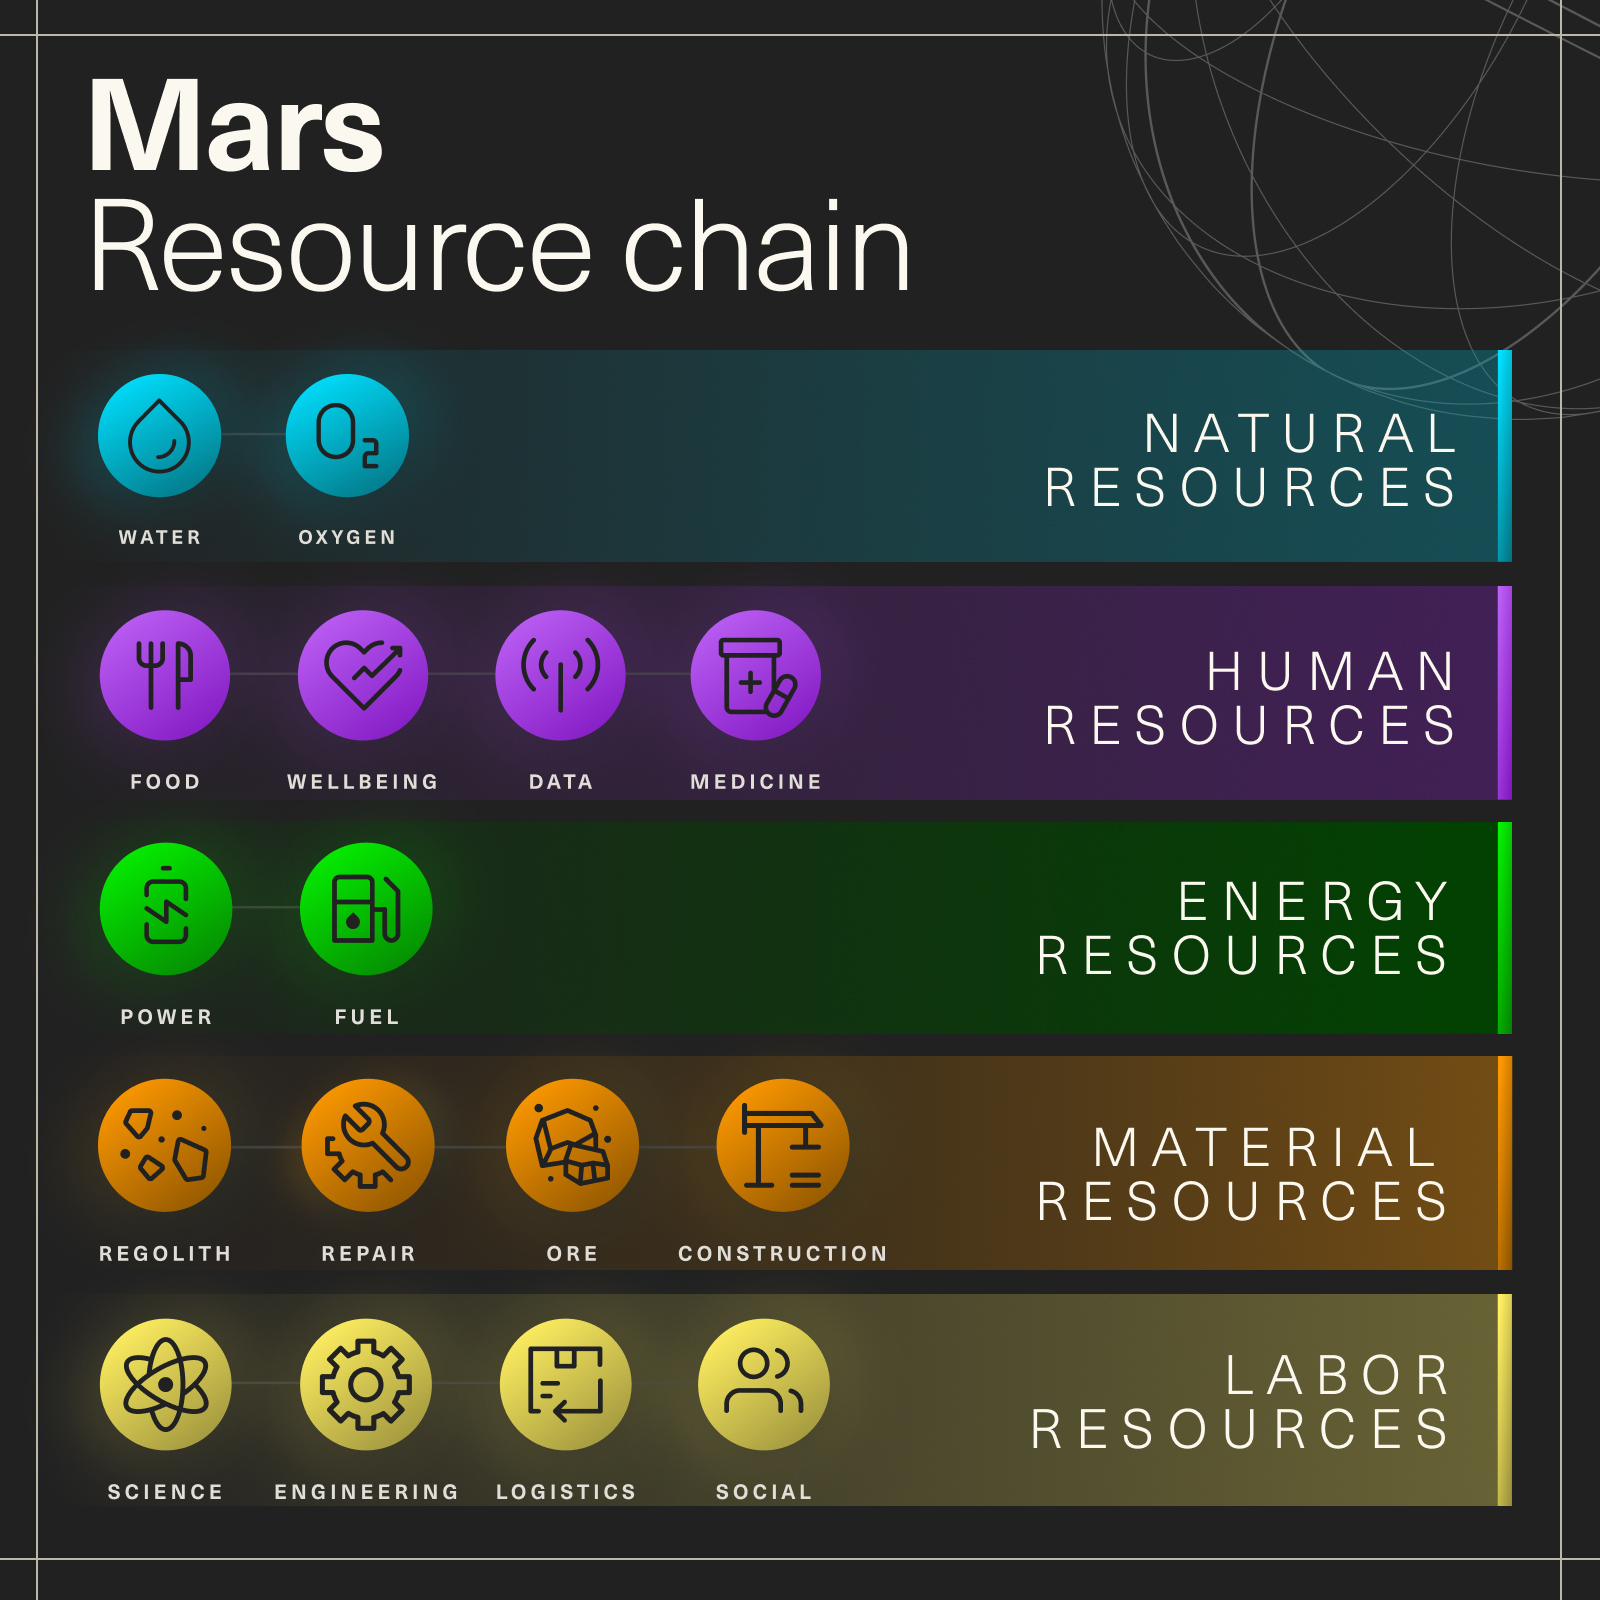 Colonize Mars resource chain